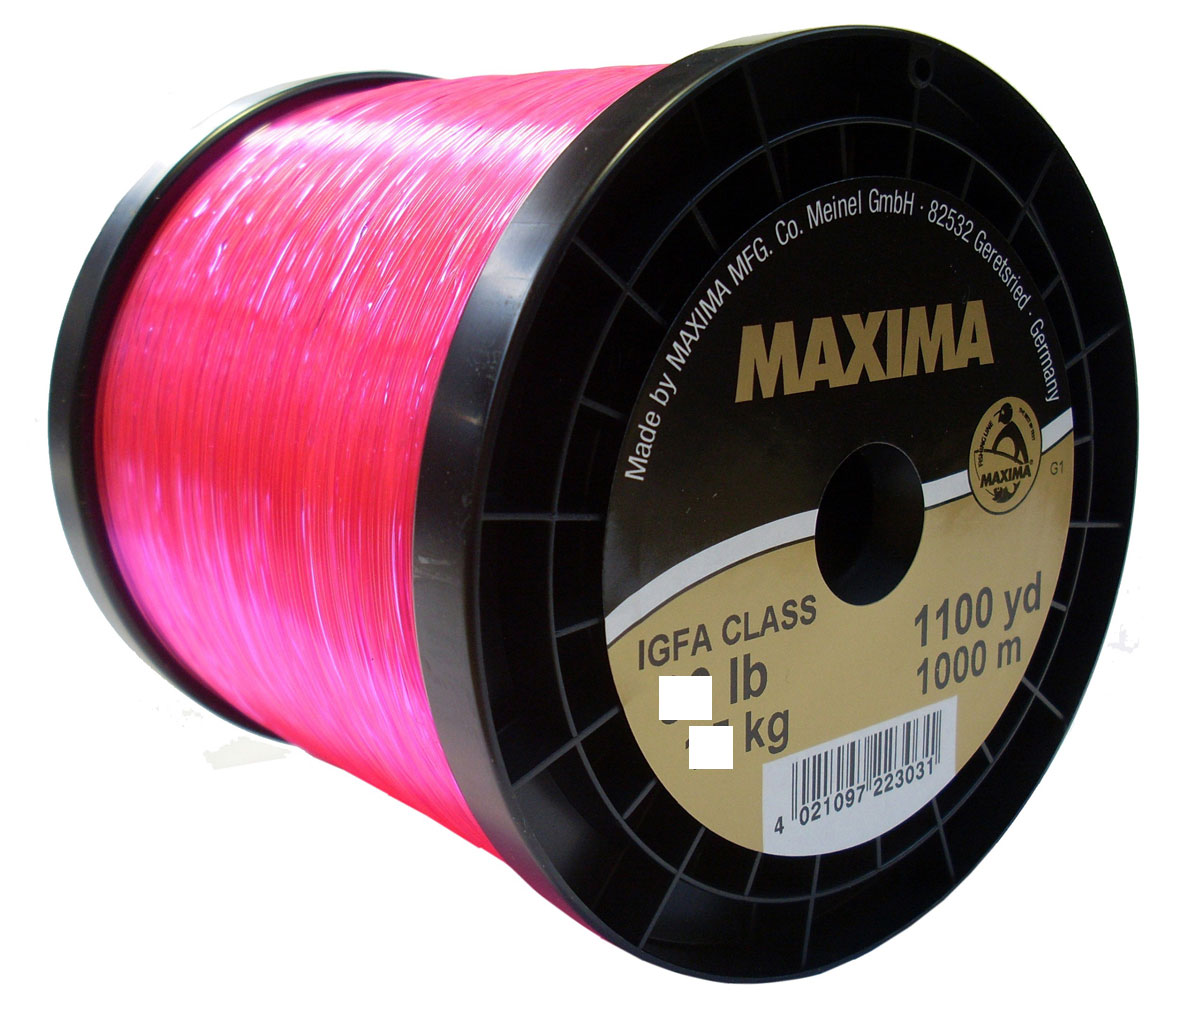 Maxima Fibre Glow Pink Monofilament Fishing Line One Shot Spool